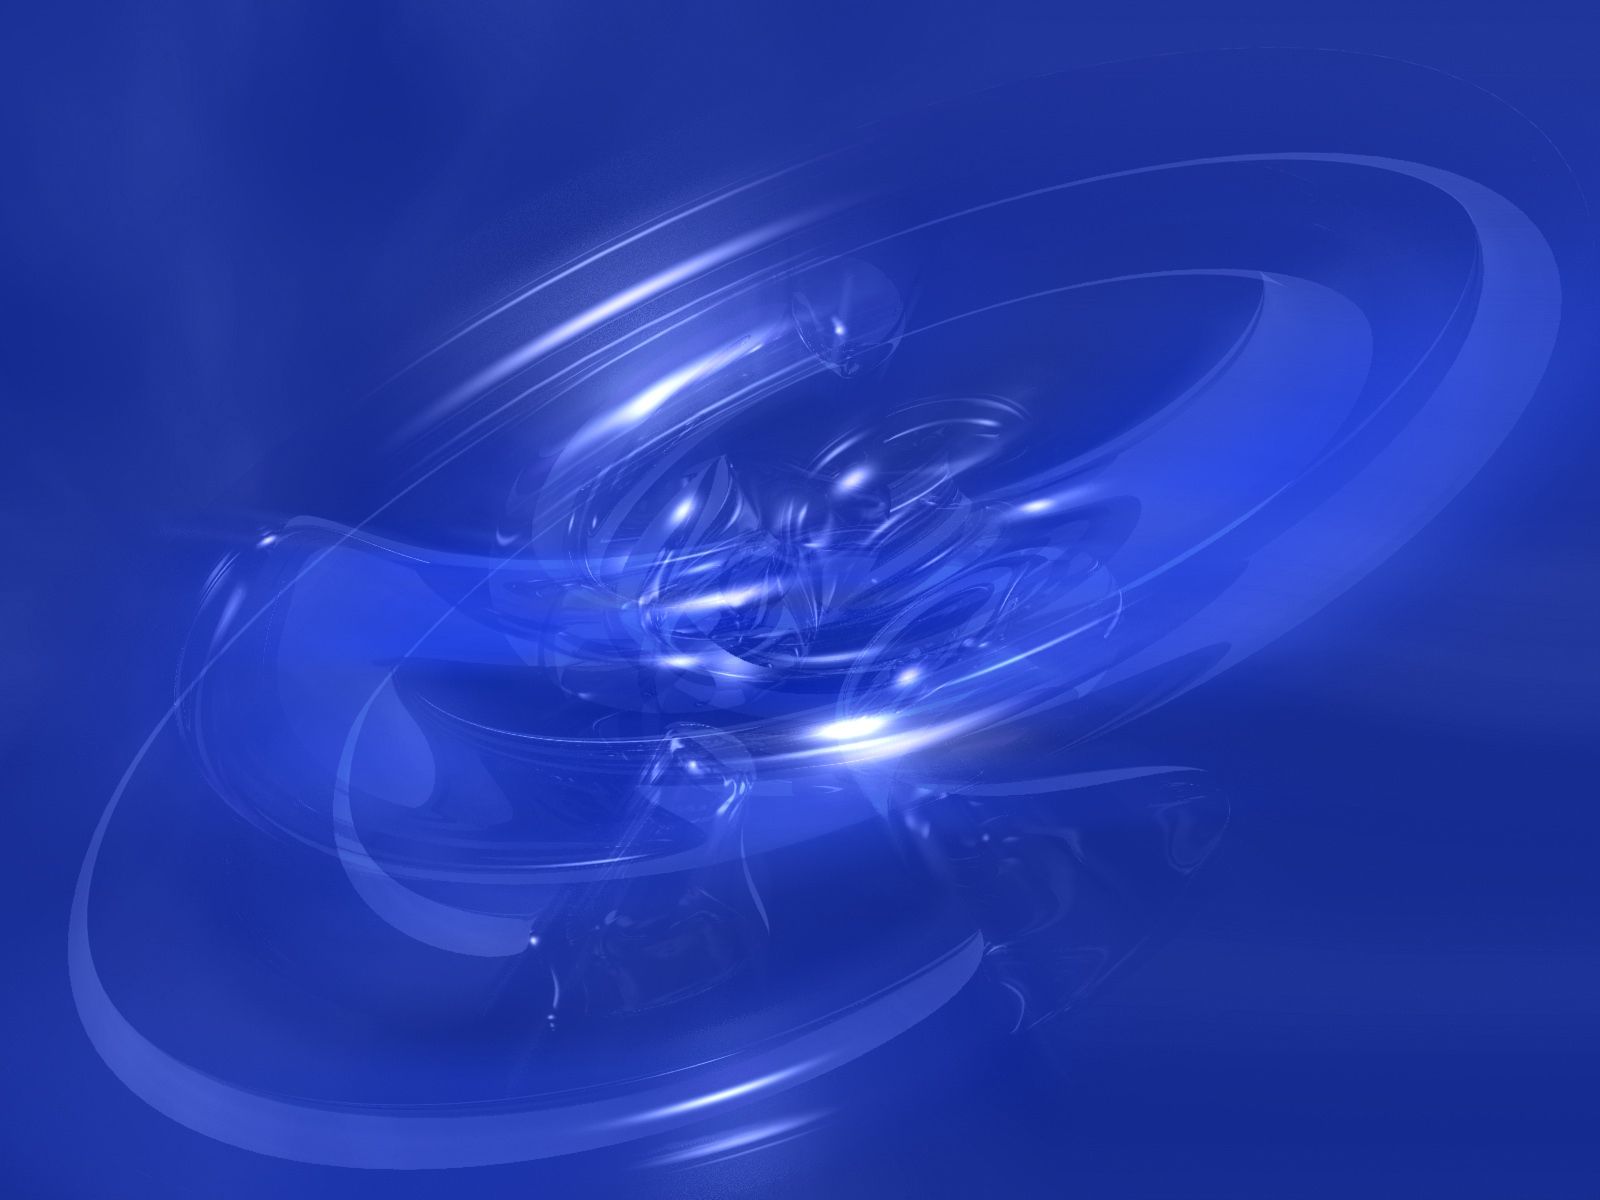 Blue Waves Windows 7 Abstract Desktop Wallpaper. Abstract